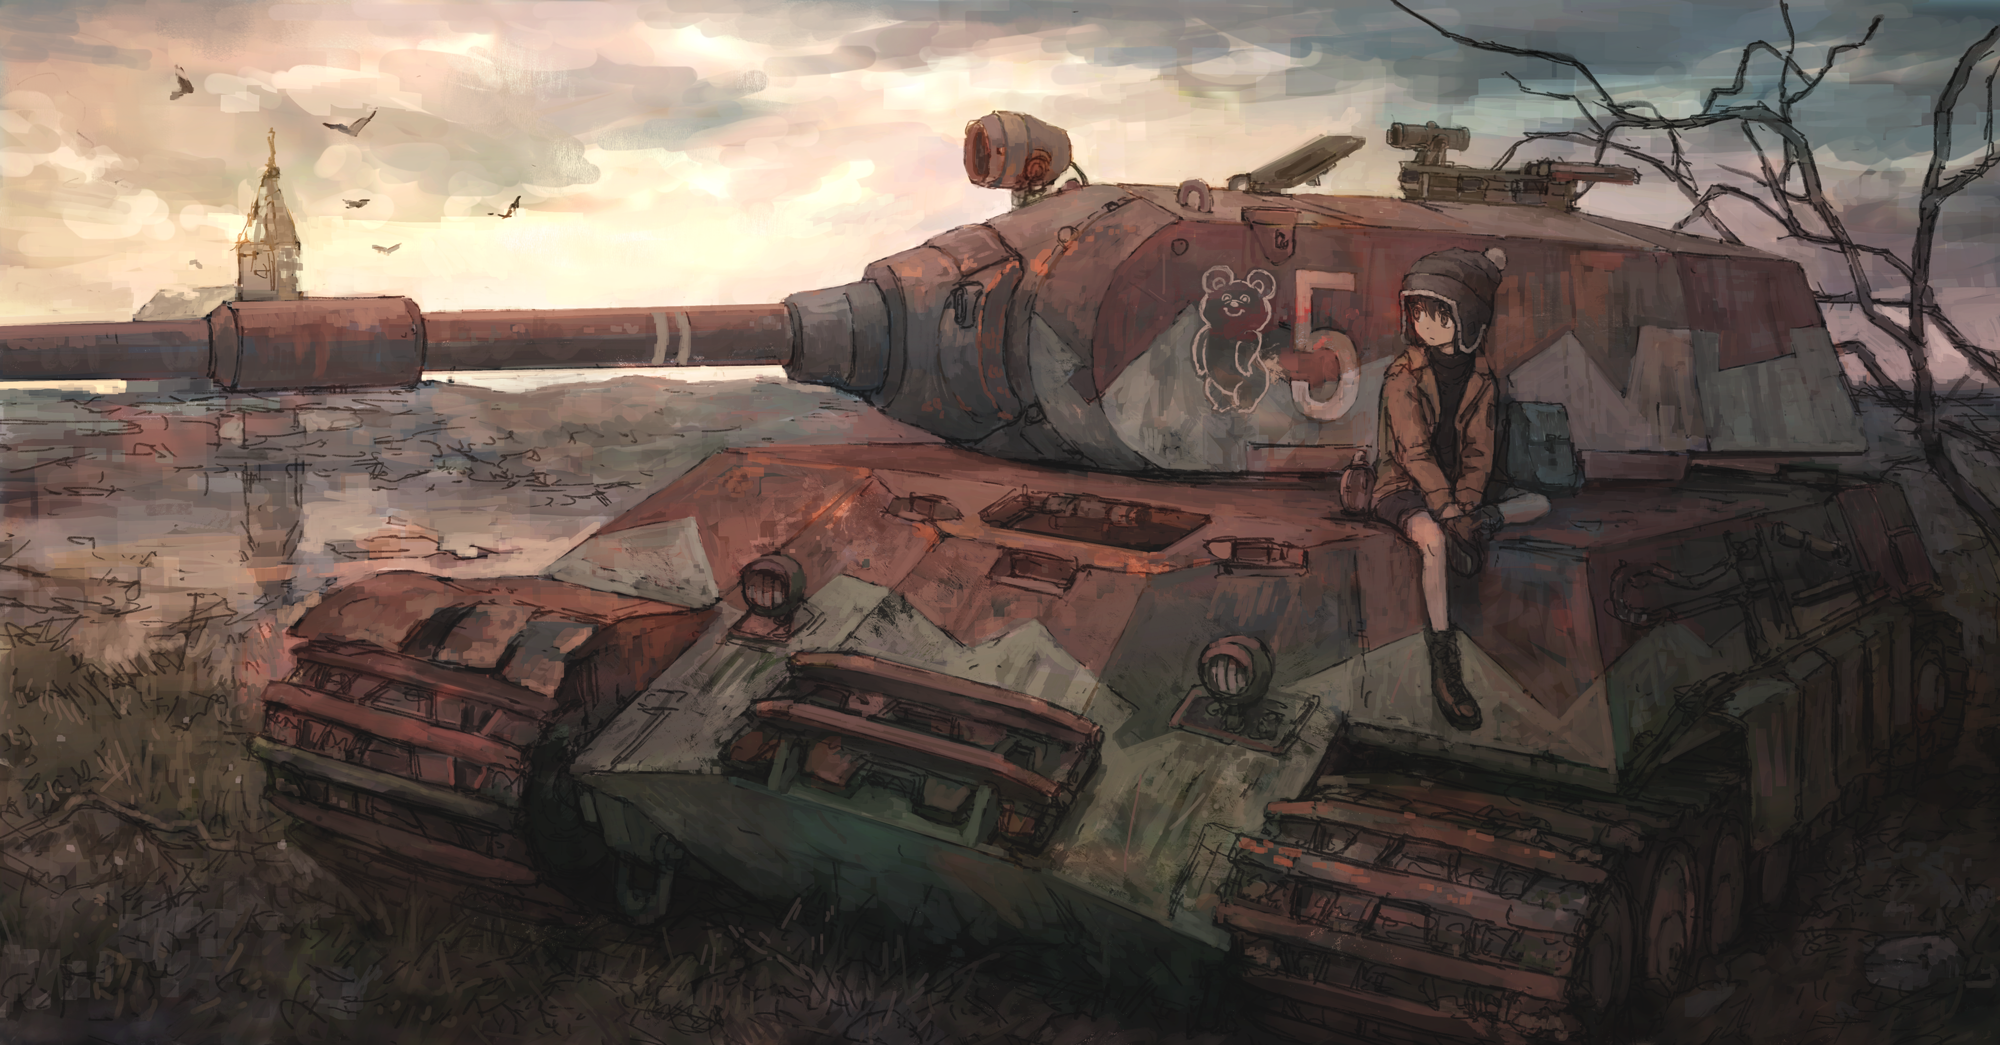 Anime 2000x1045 anime anime girls digital art artwork 2D portrait tank military vehicle sitting outdoors Tokunaga Akimasa